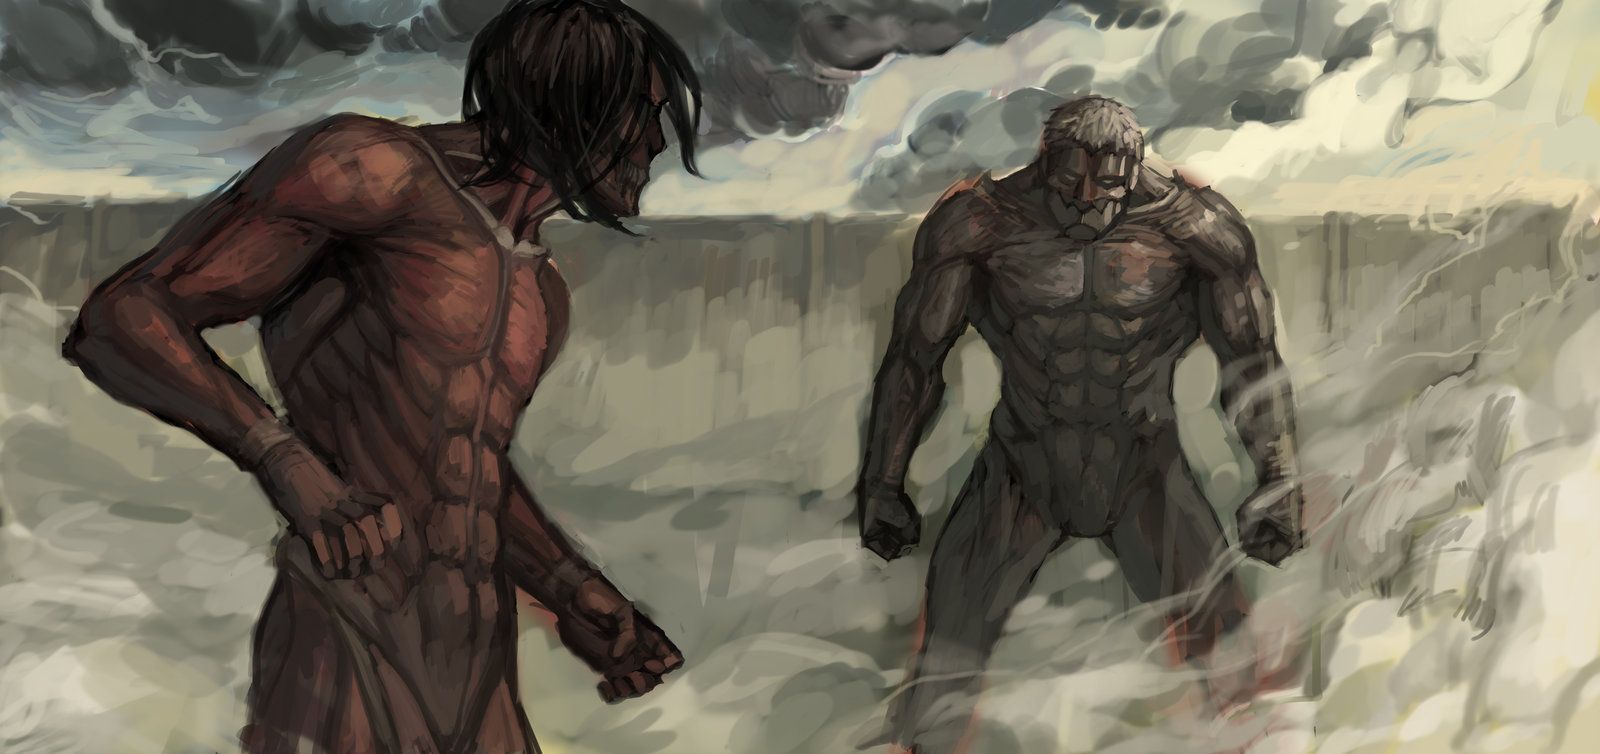 Attack on Titan Image Anime Image Board